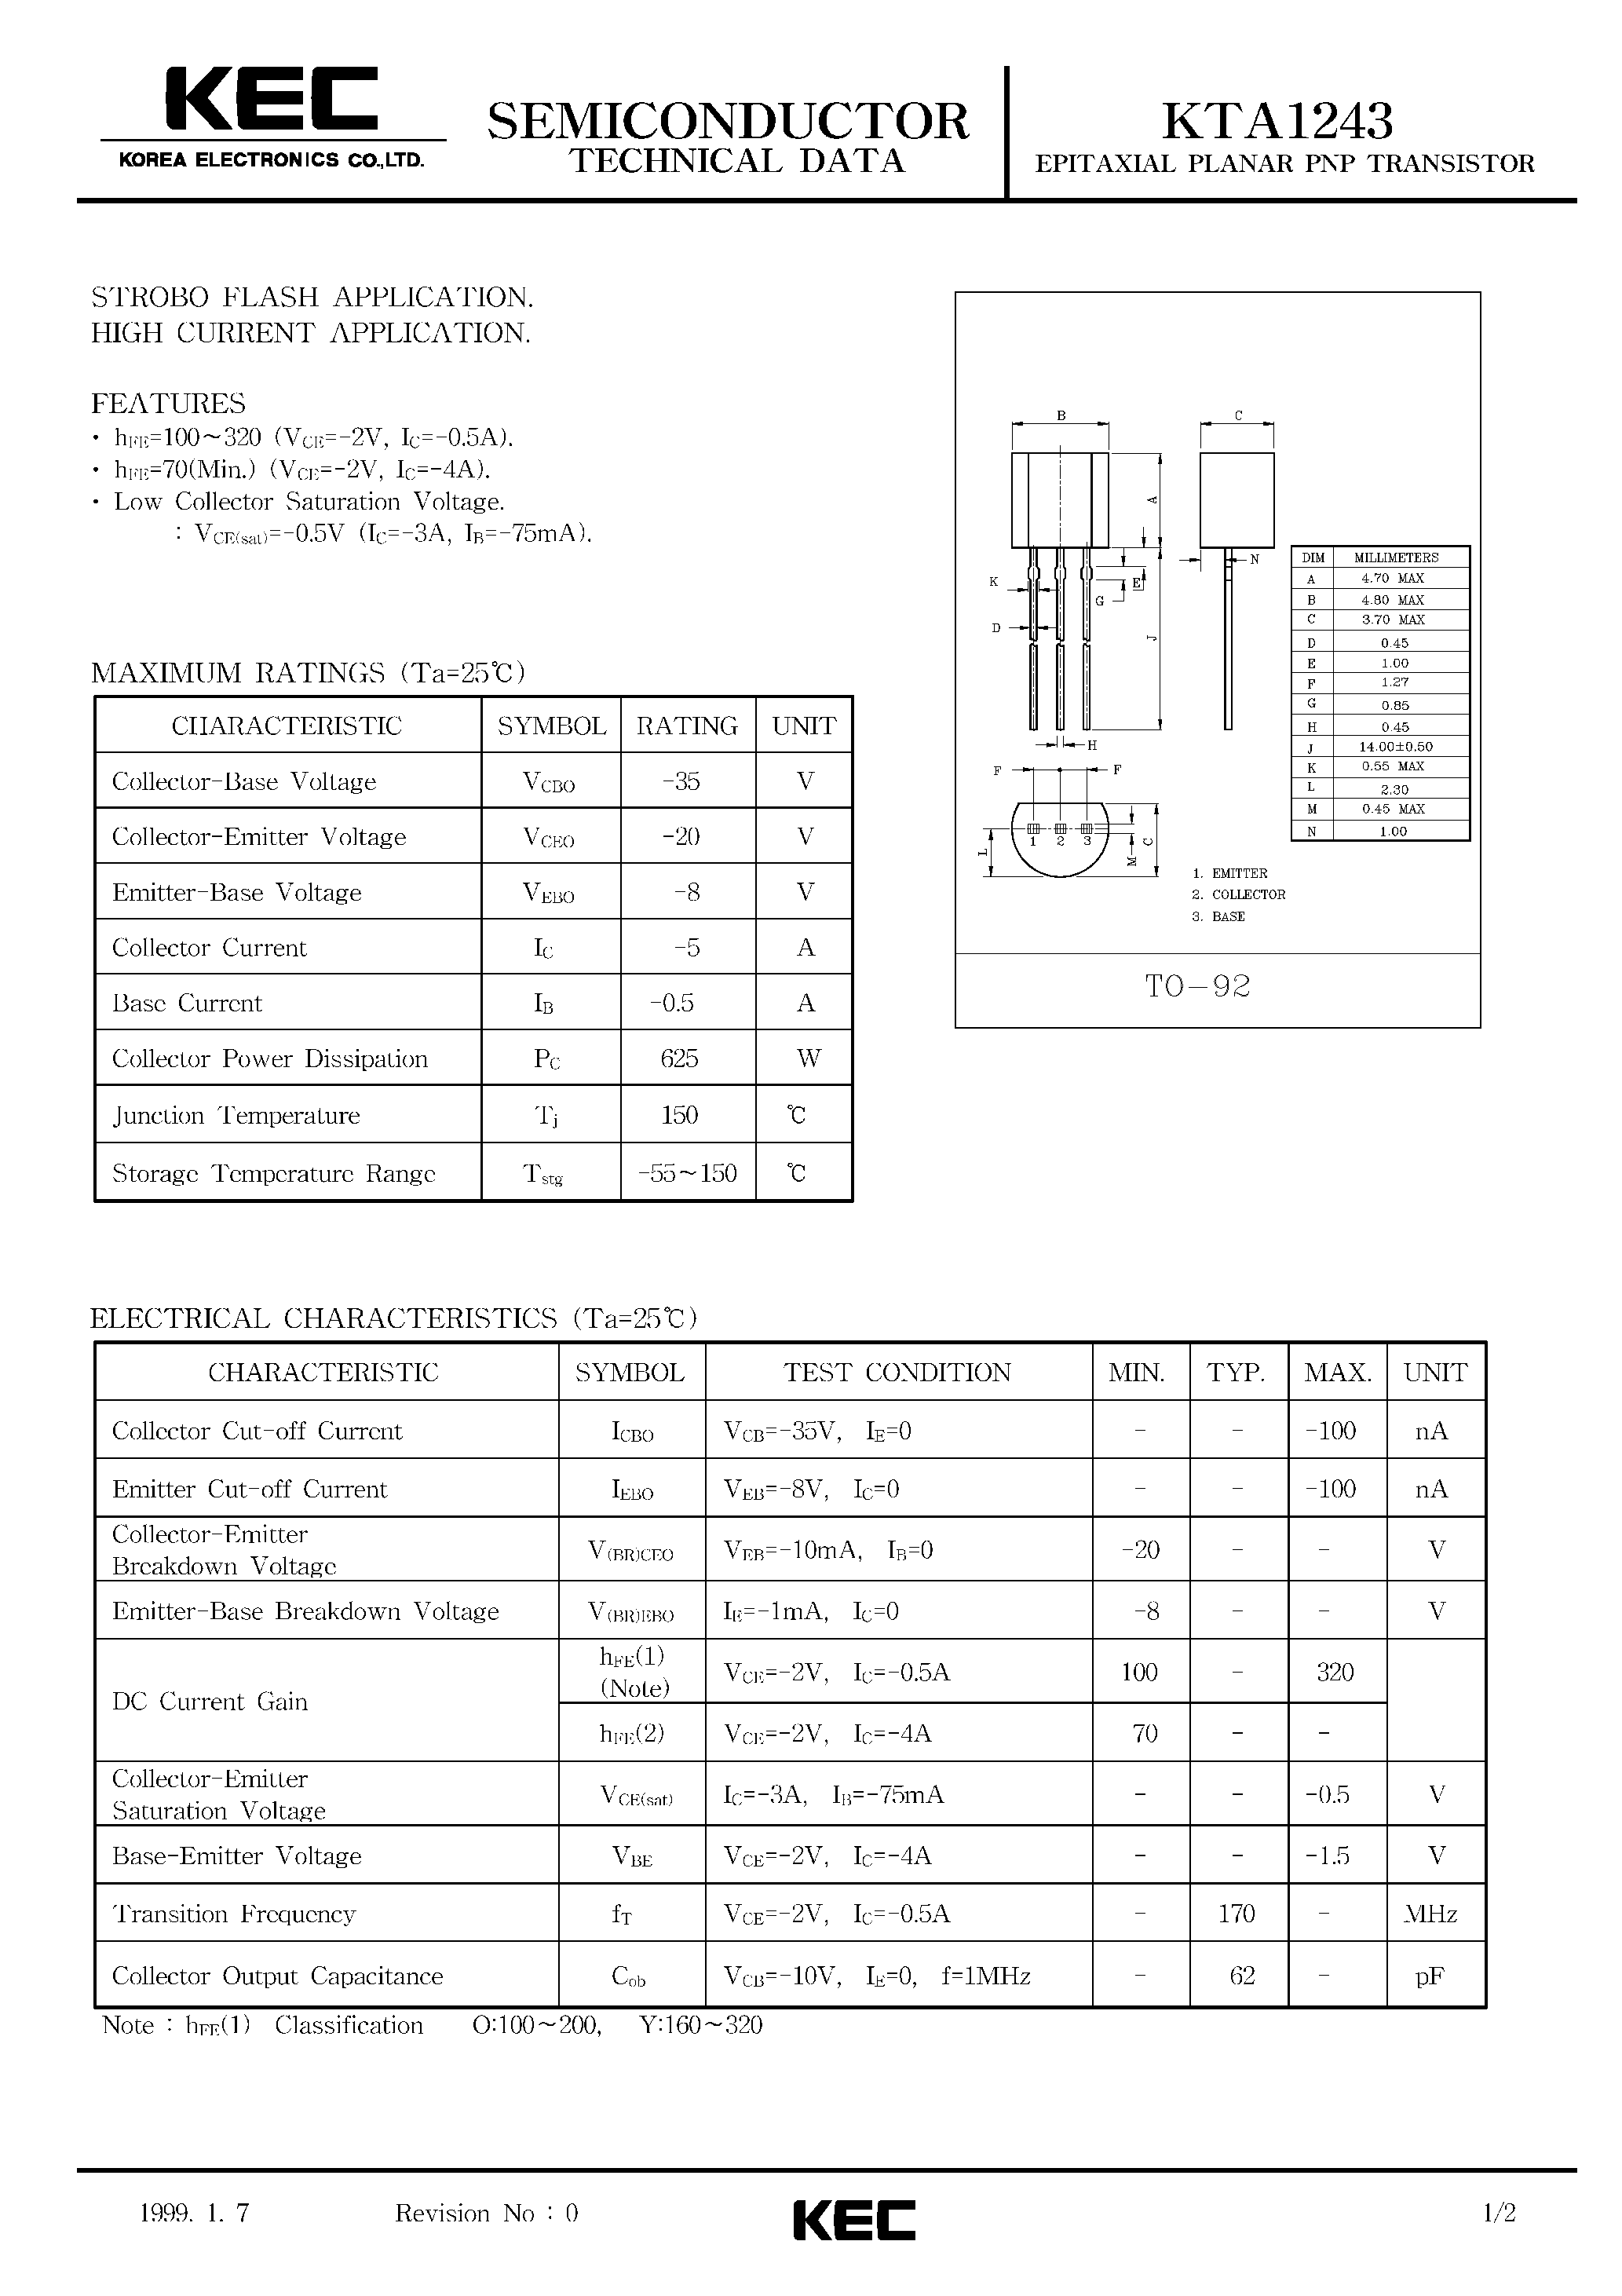 Datasheet KTA1243 - EPITAXIAL PLANAR PNP TRANSISTOR (CAMERA STROBO FLASH/ HIGH CURRENT) page 1